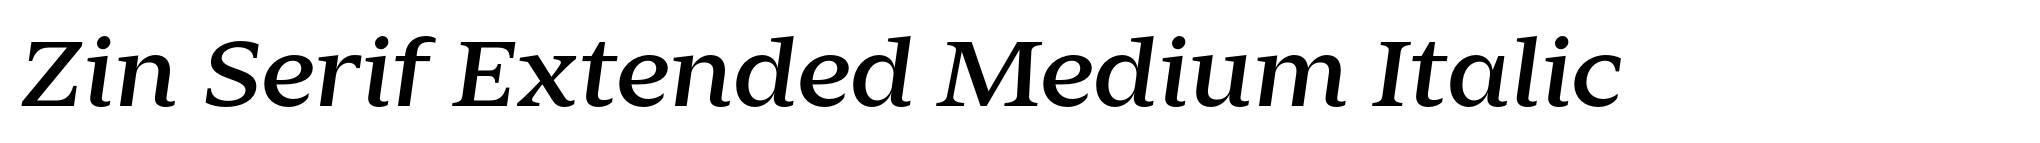 Zin Serif Extended Medium Italic image